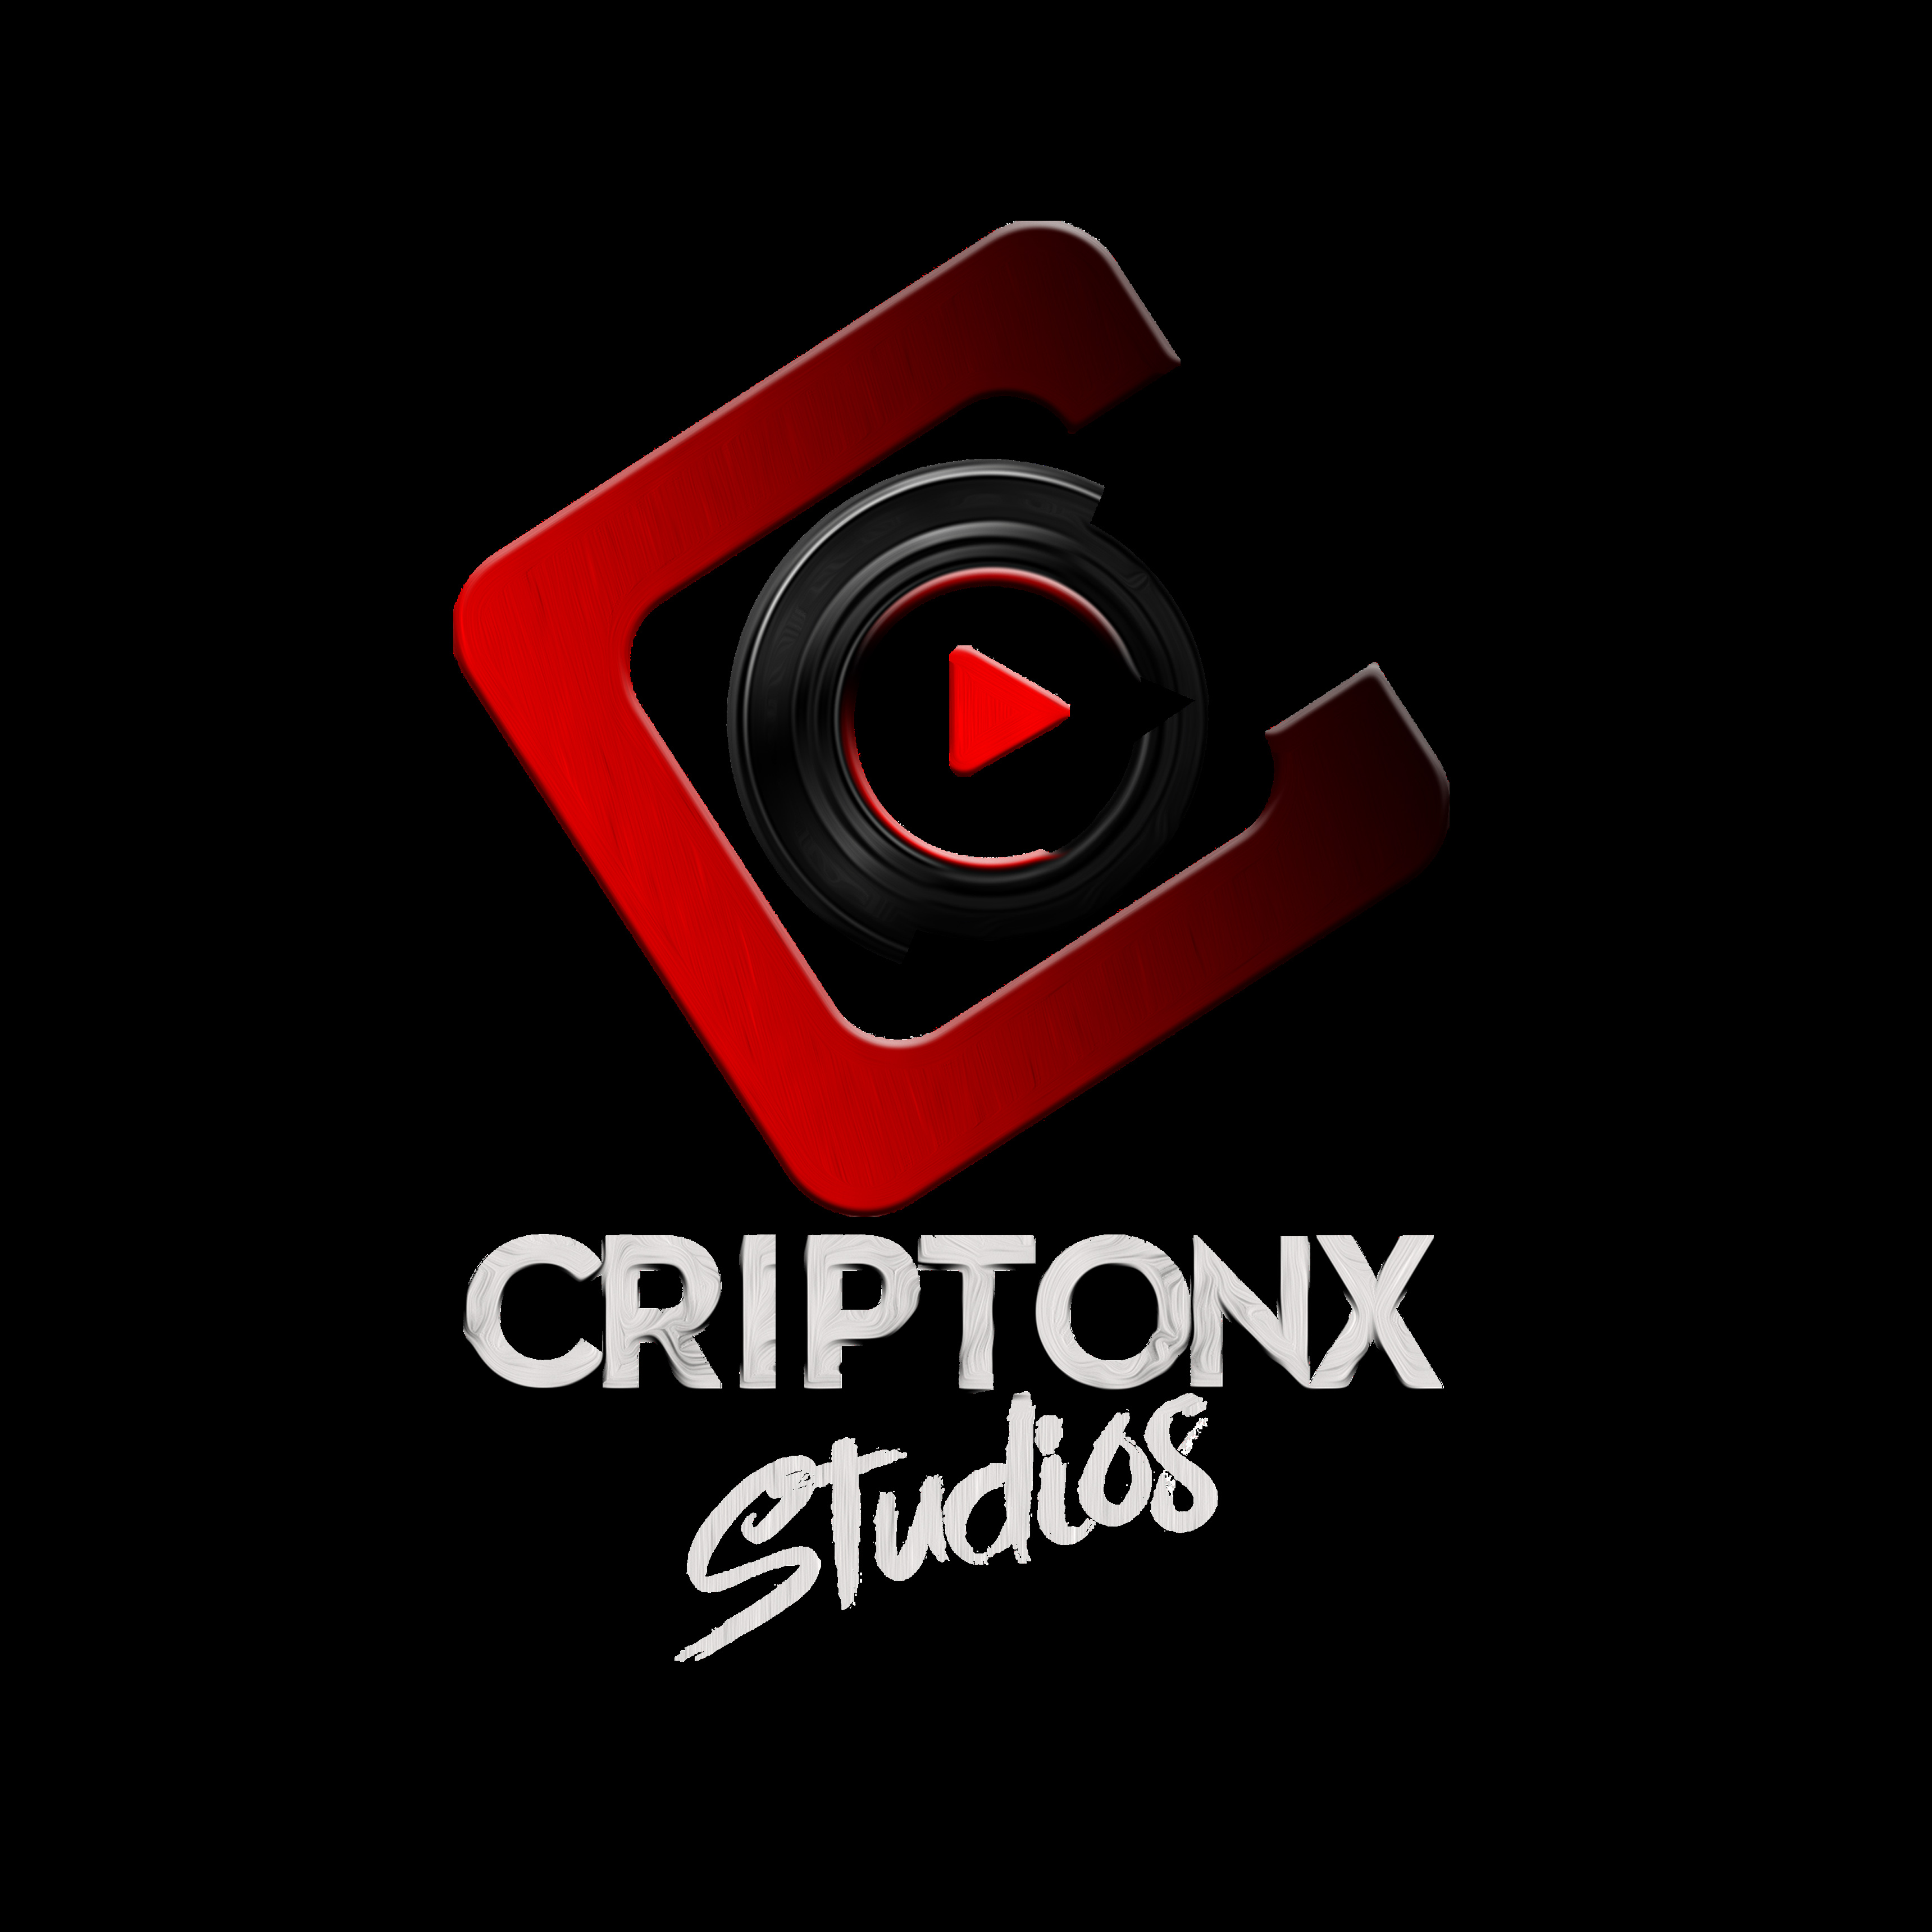 Criptonx Studios anyservice service provider